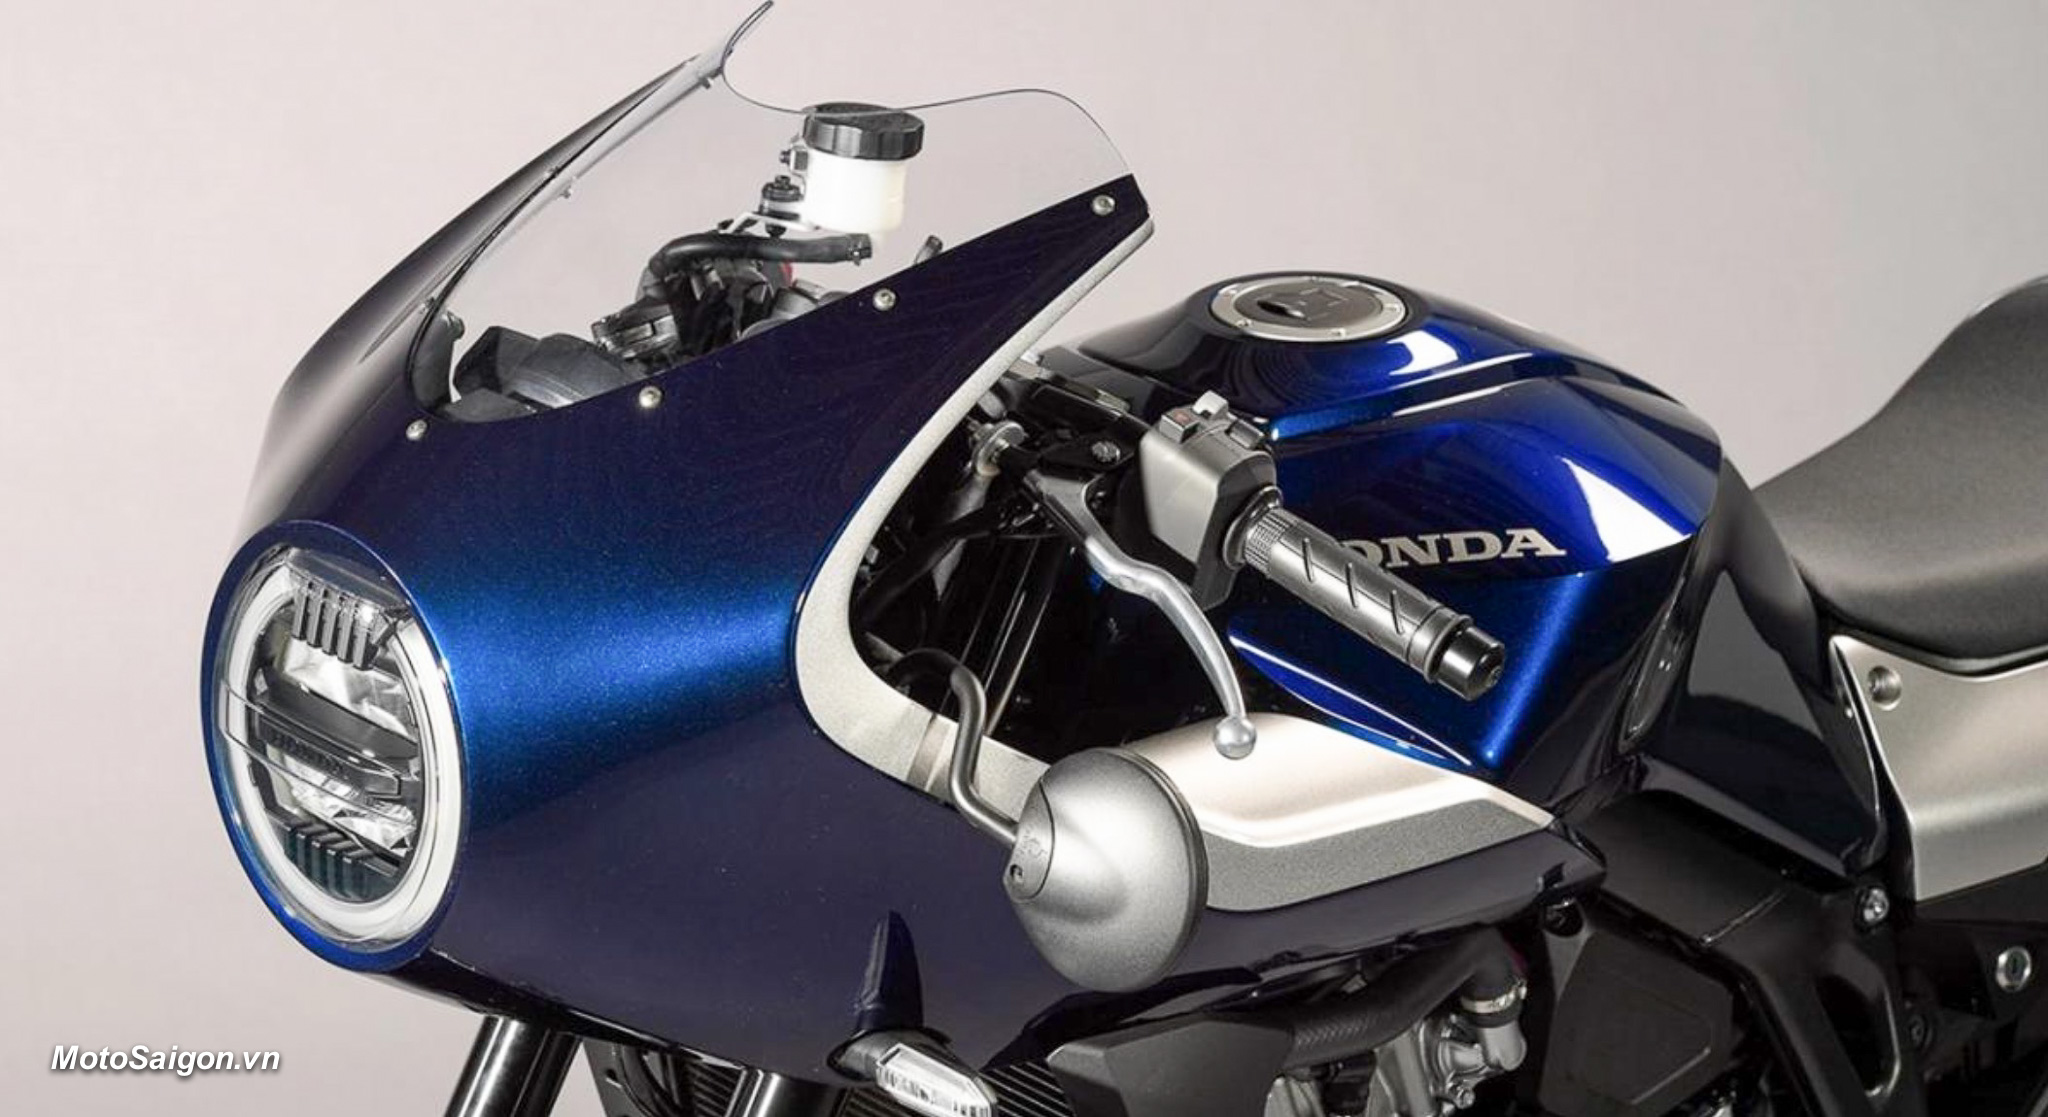 Honda CBR 750RR Fireblade Prototype